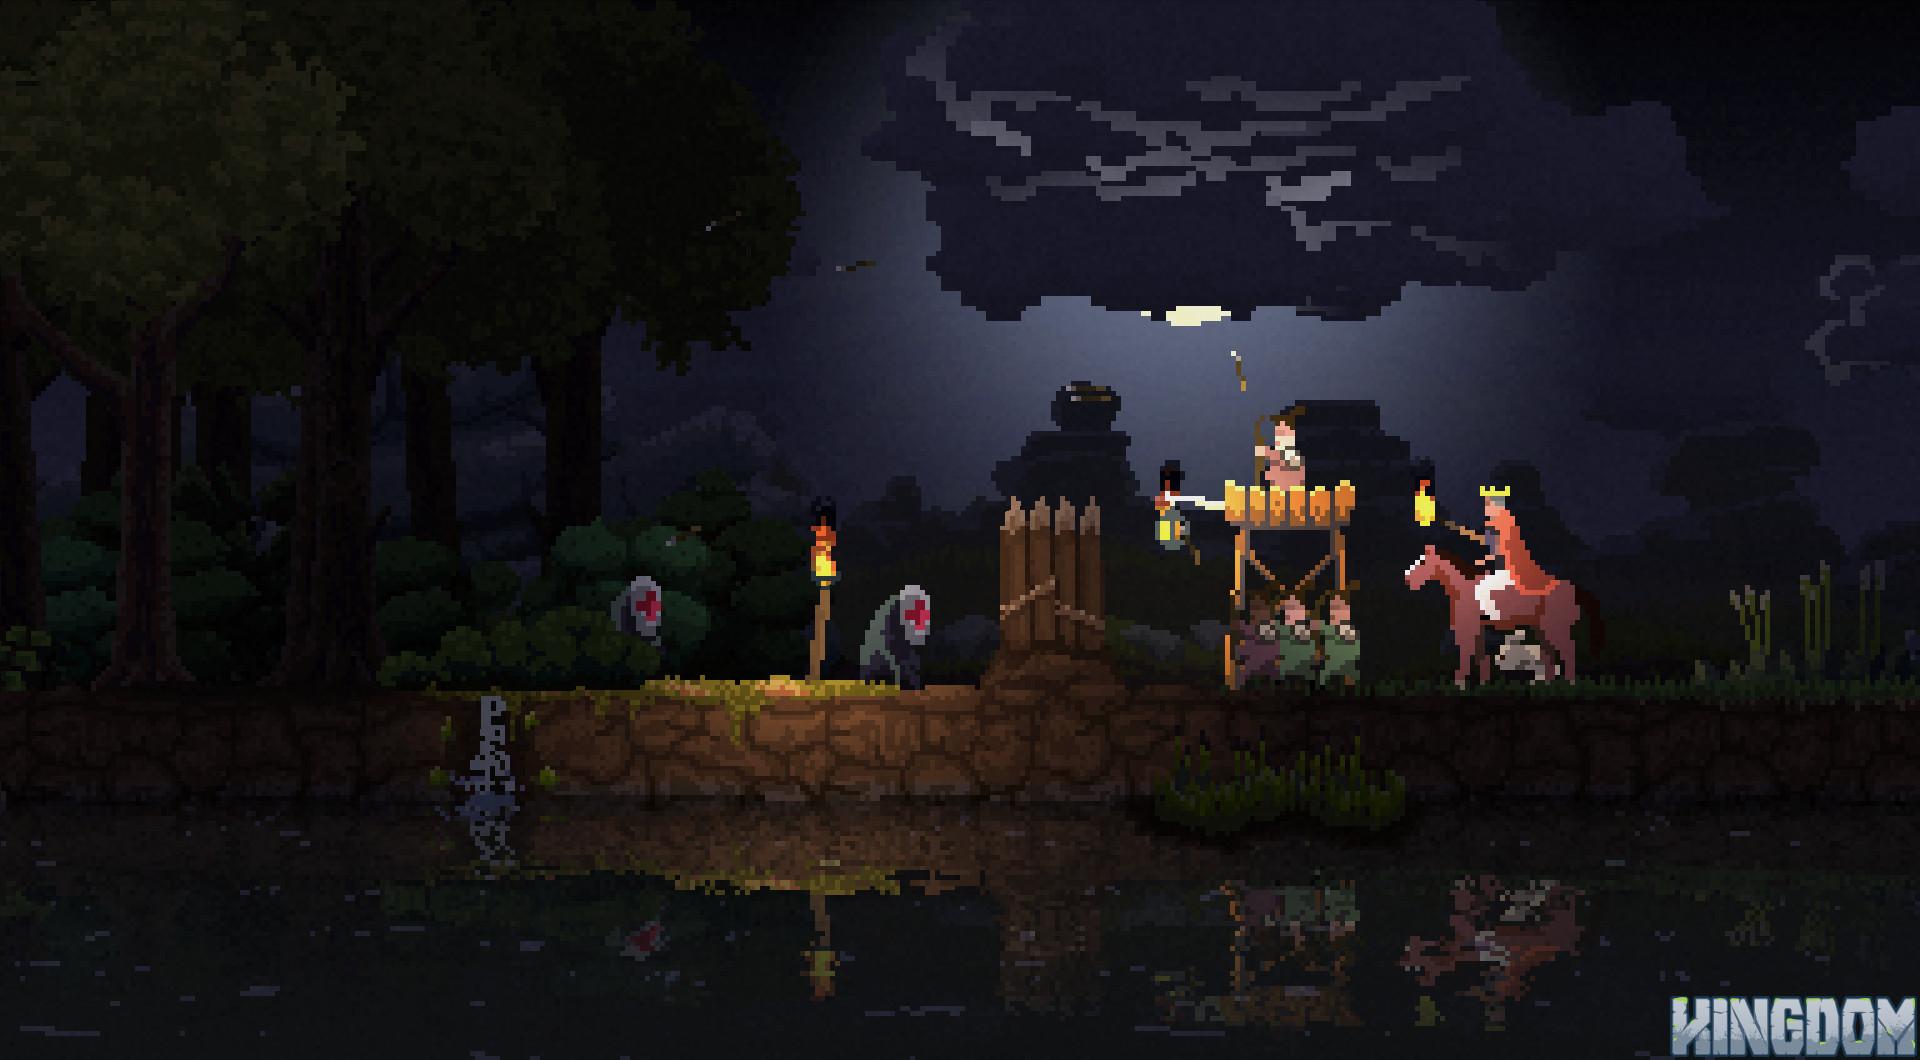 Screenshot №5 from game Kingdom: Classic